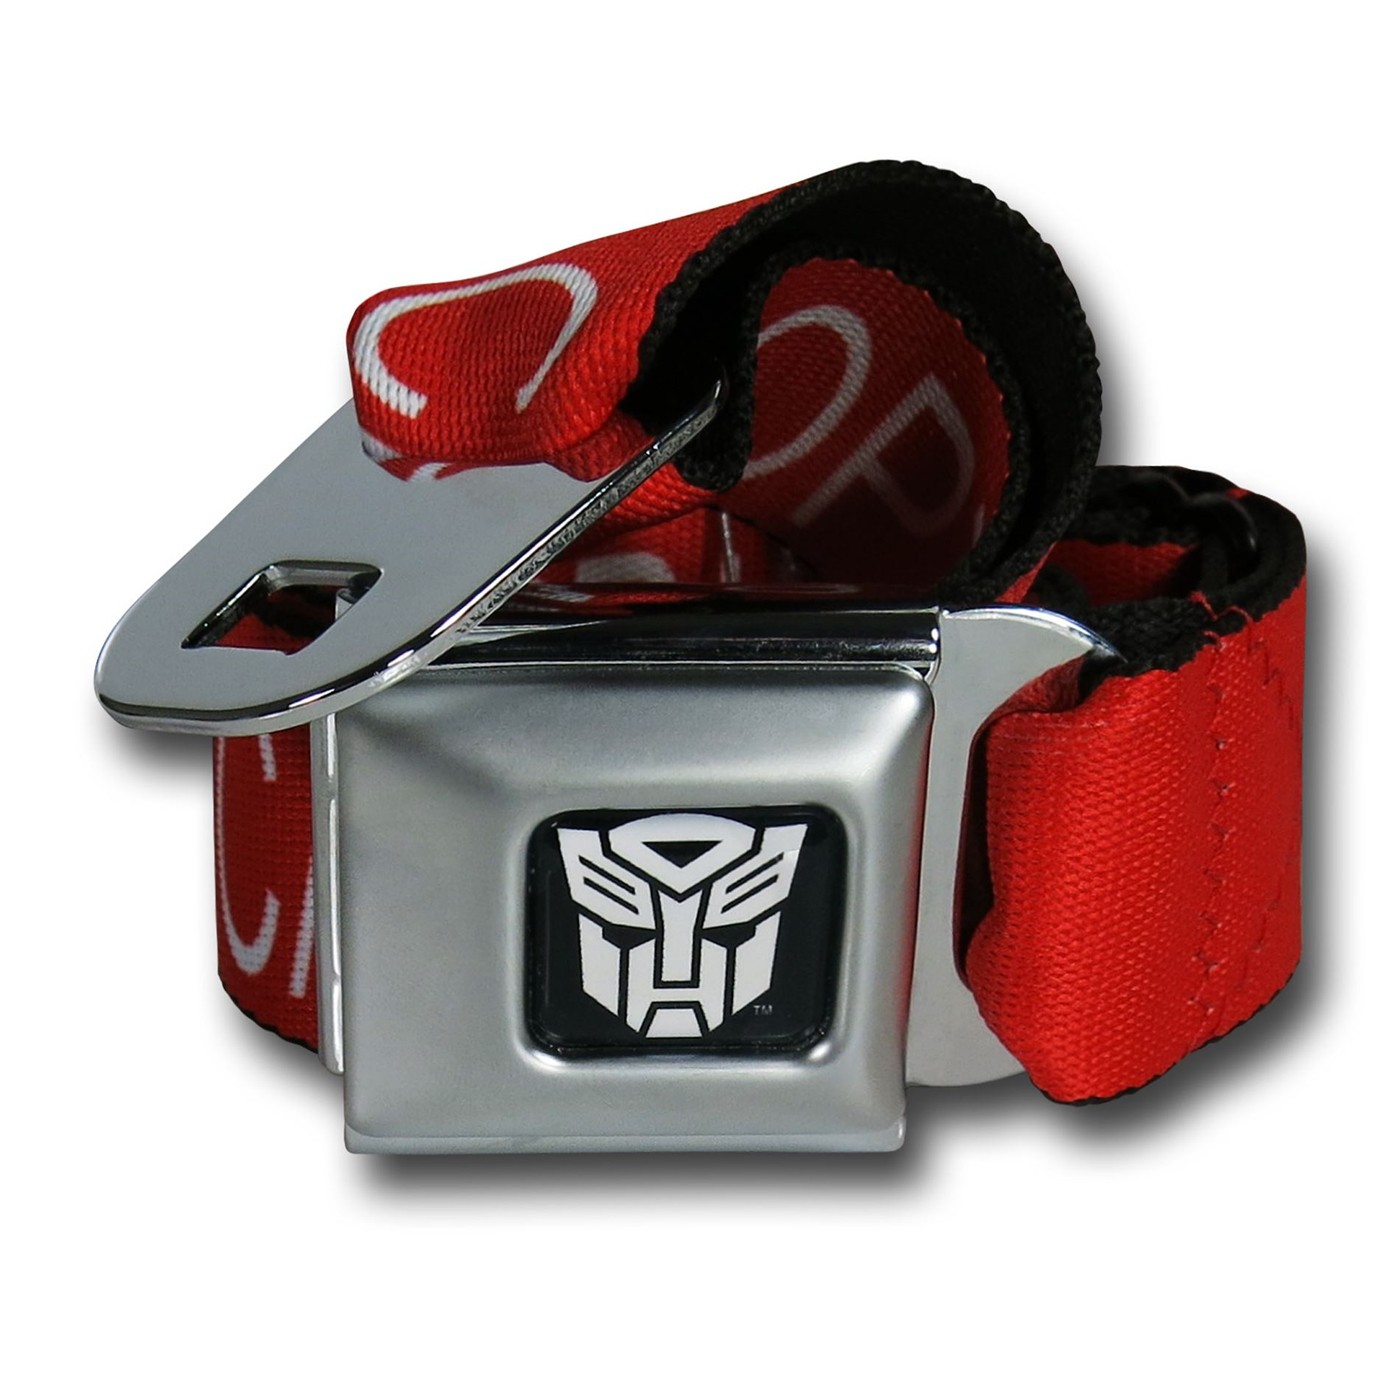 Transformers Optimus Prime Keep Calm Seatbelt Belt